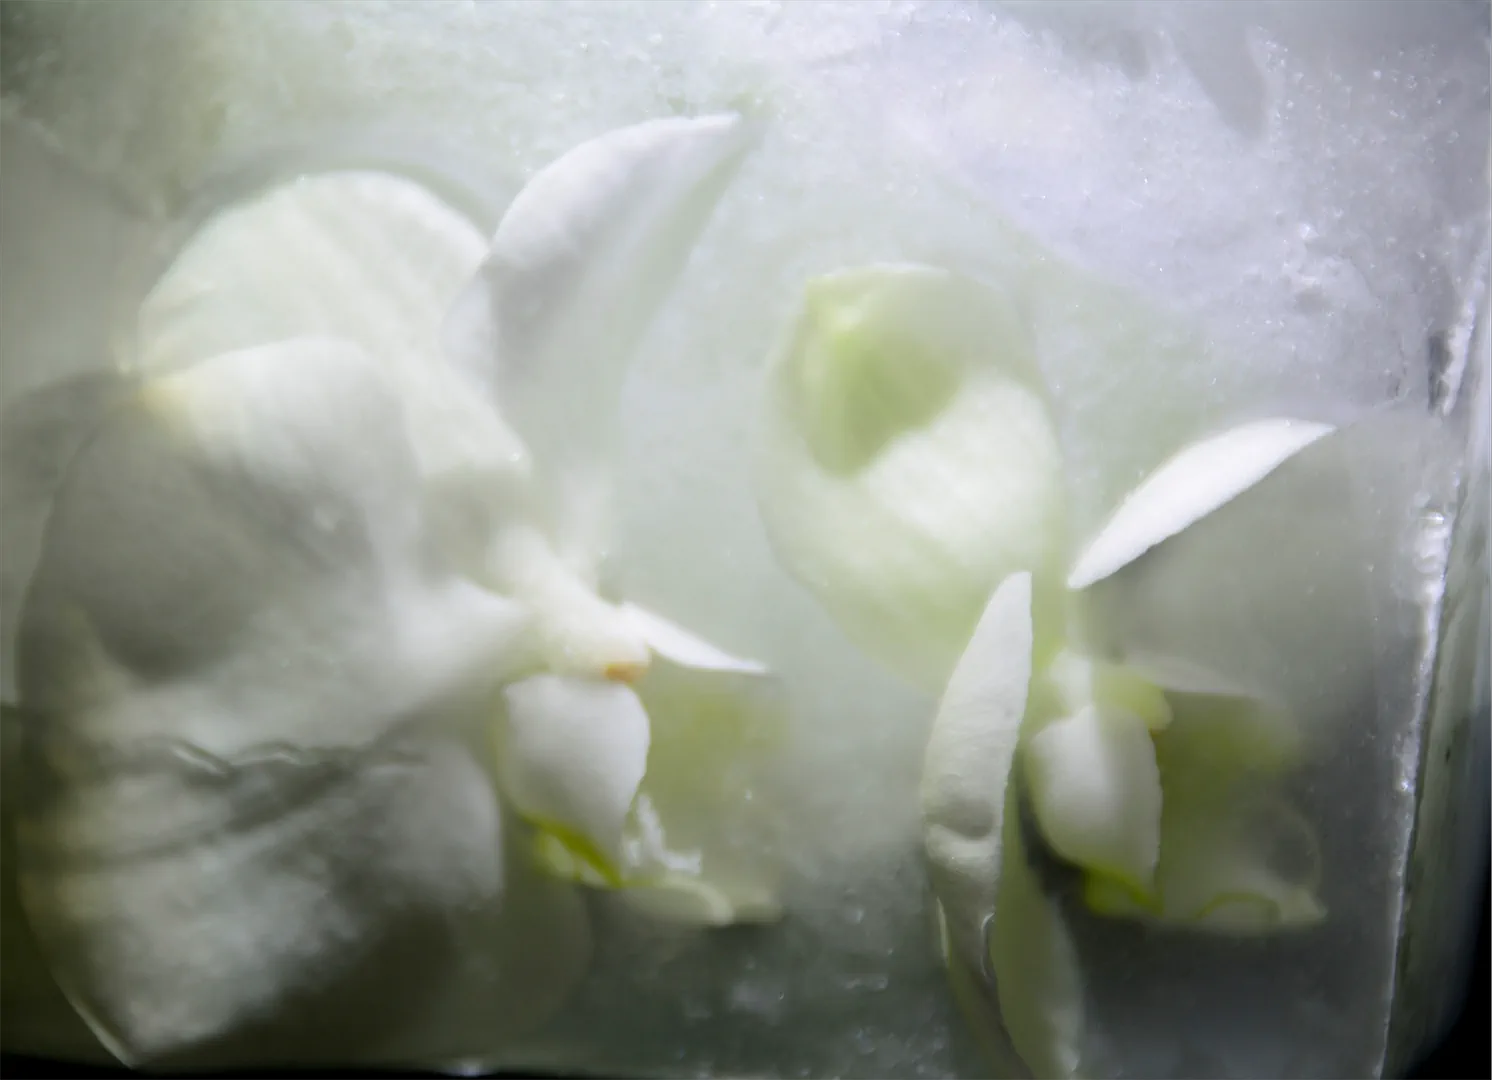 4 Orchidee In Eis Pfaff Költe 1080h 60